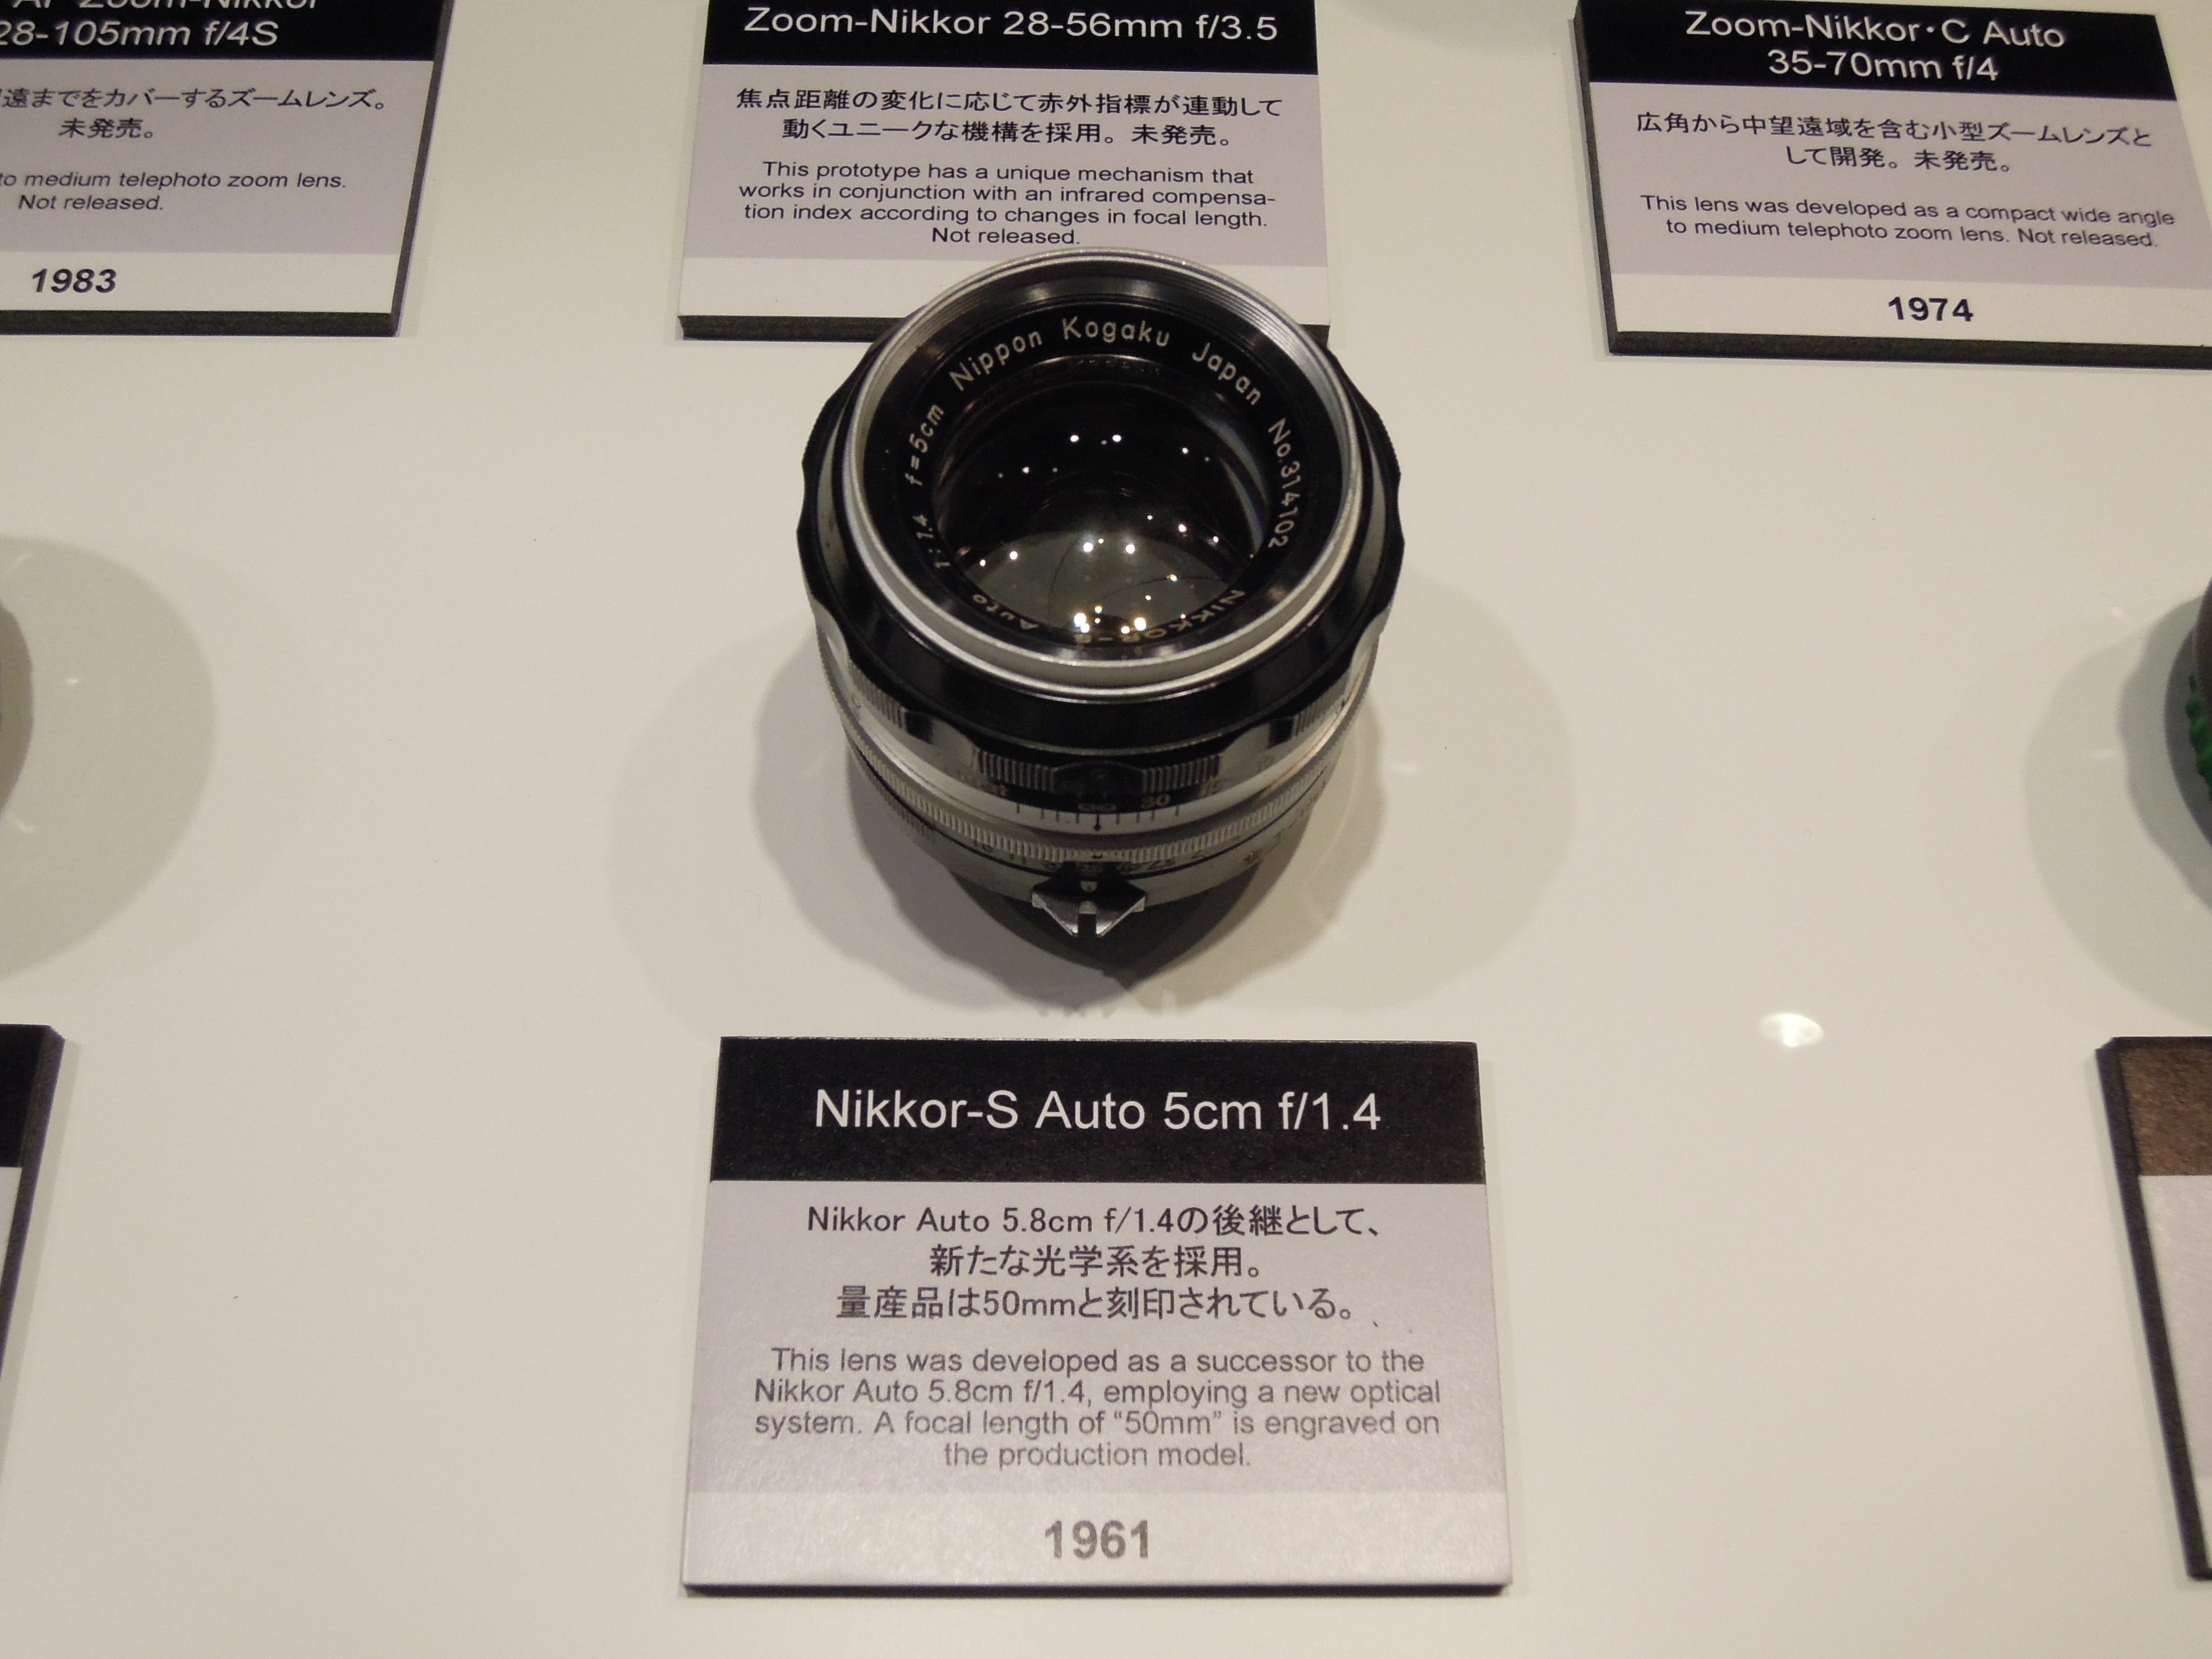 The Nikon Museum Special Exhibition 